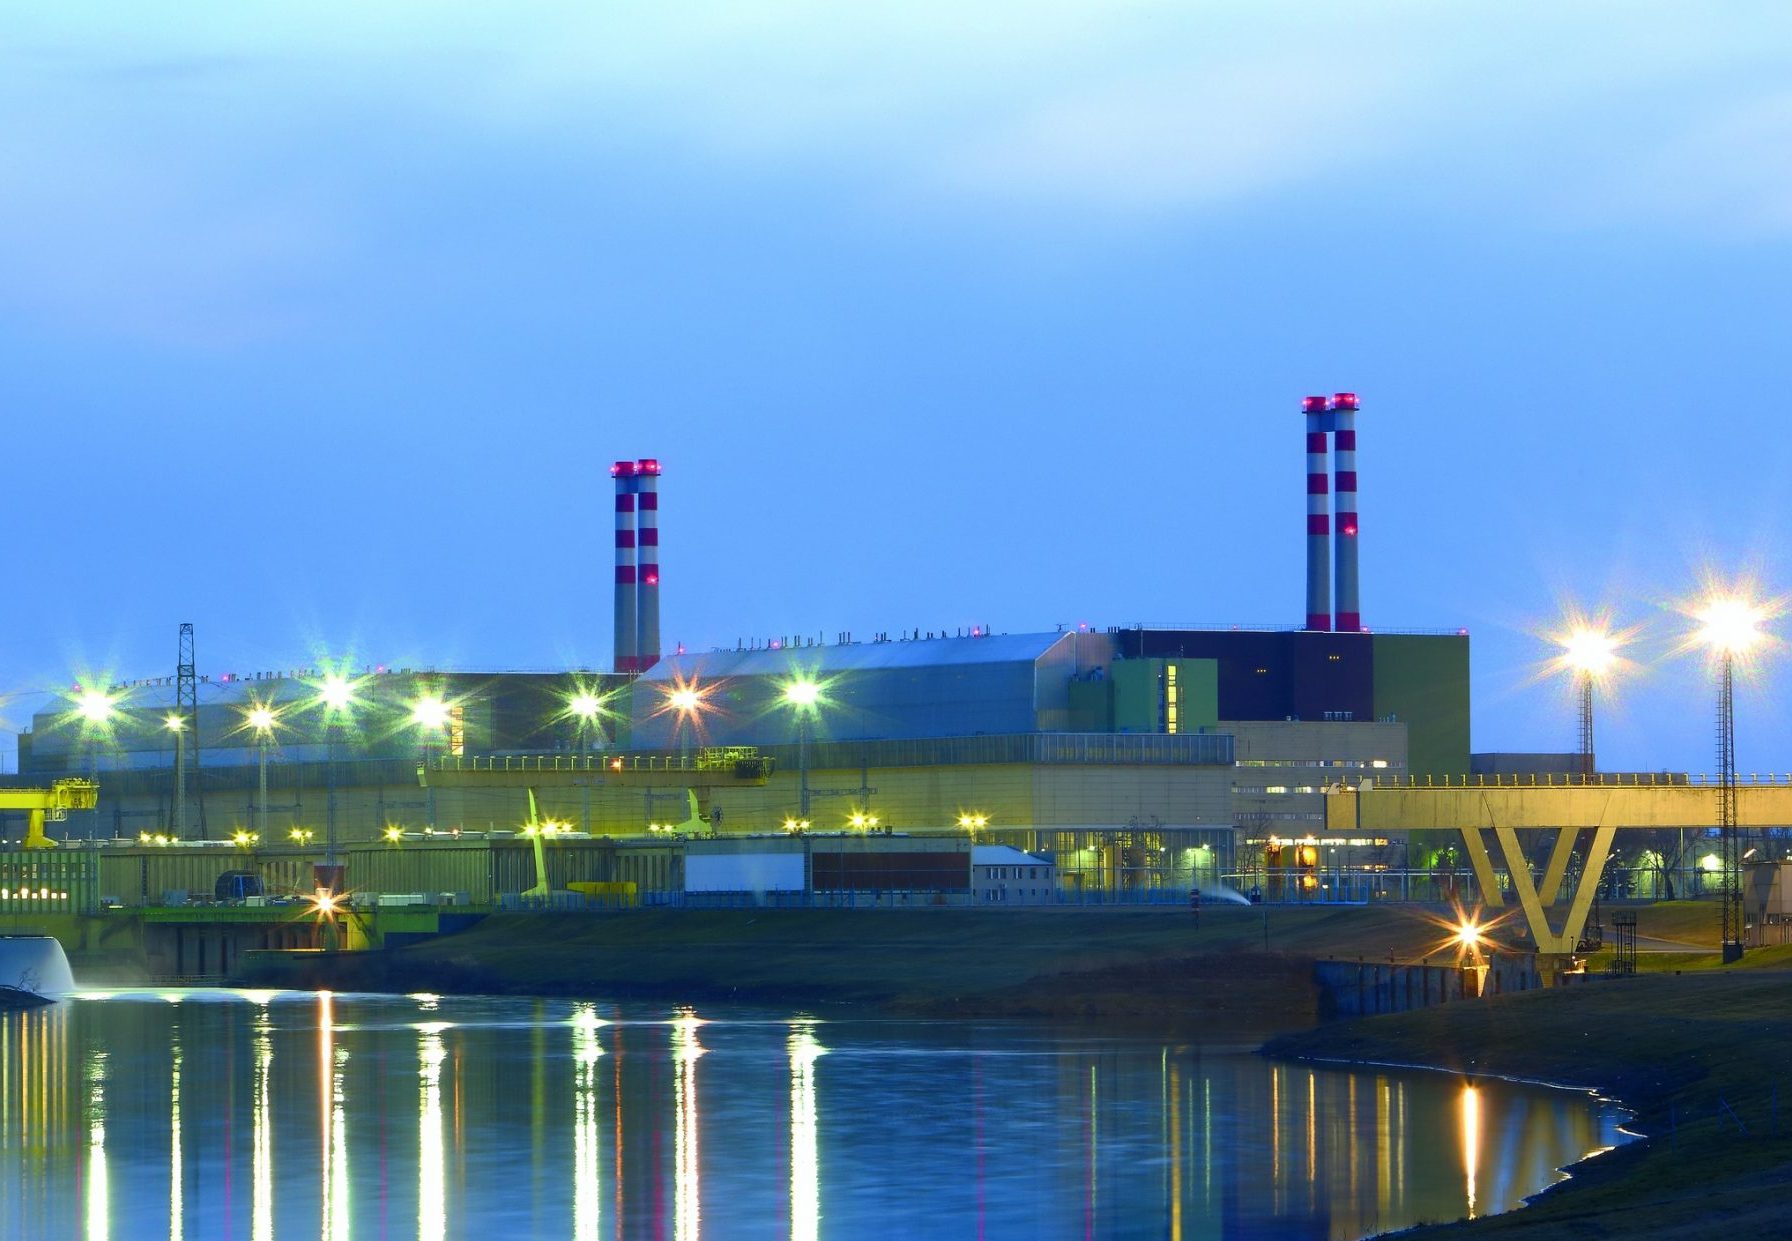 Austria Loses EU Court Case against Hungarian Nuclear Power Plant